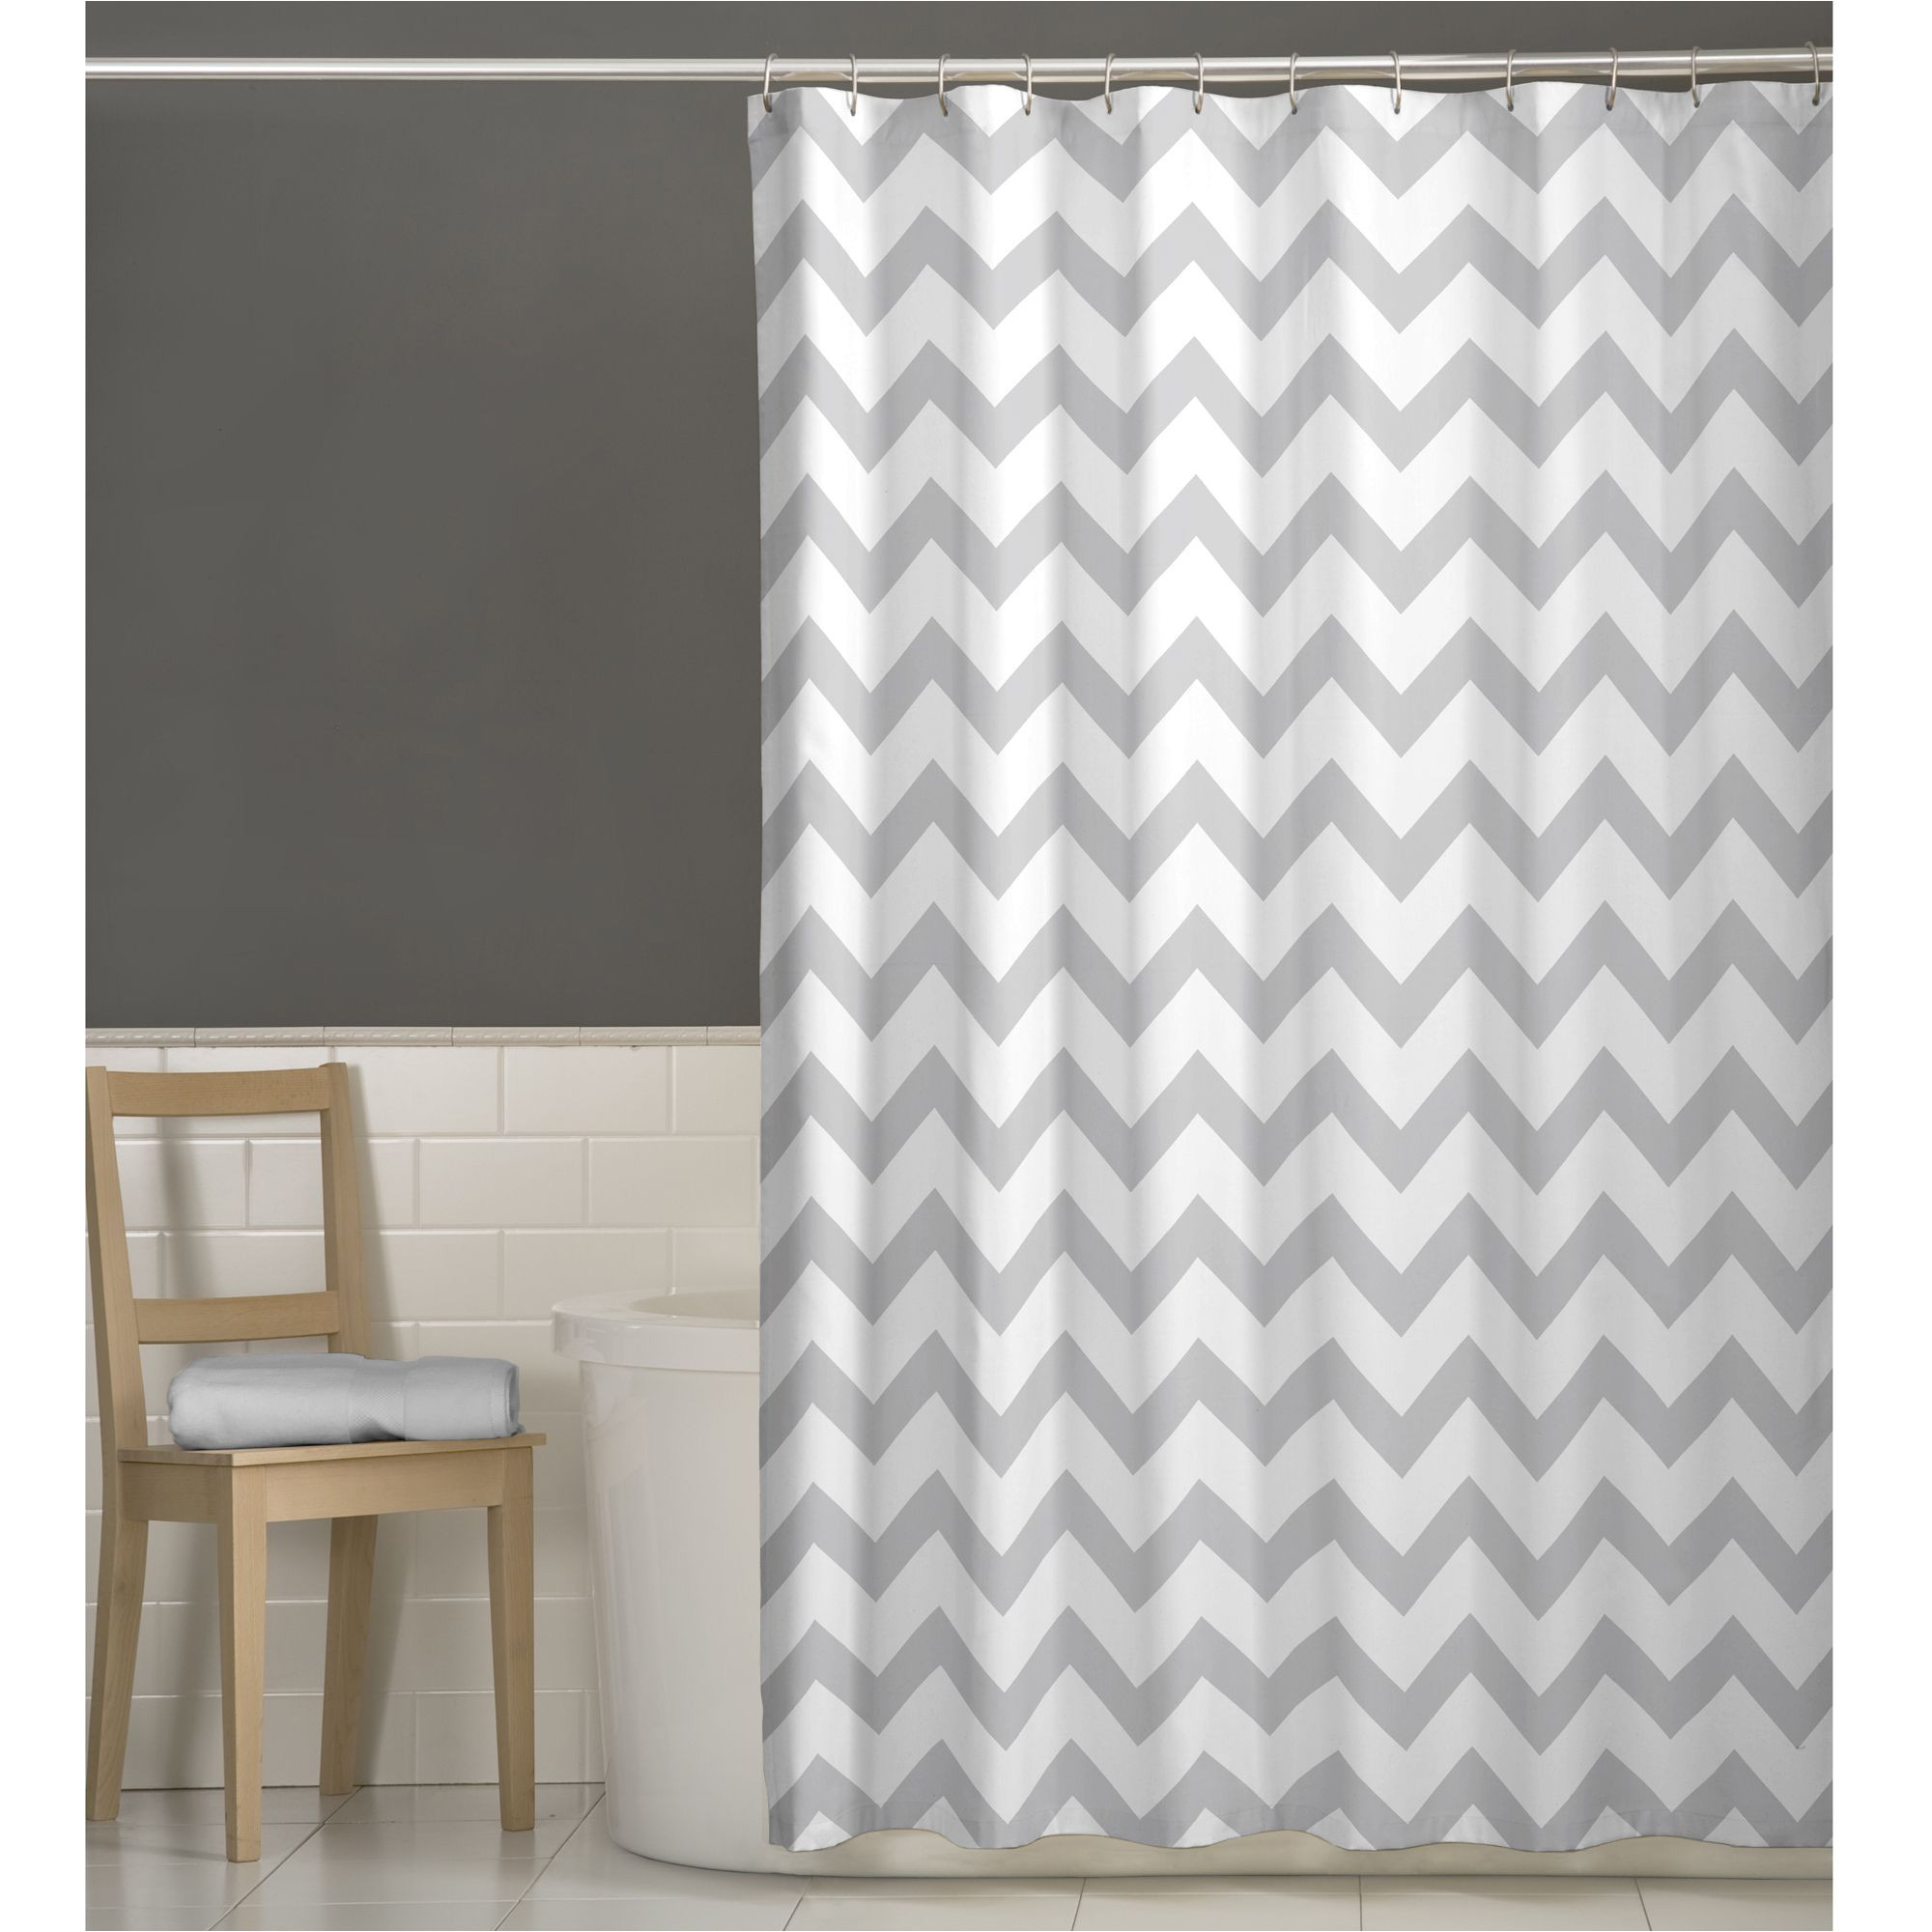 70 x 72 maytex chevron fabric shower curtain